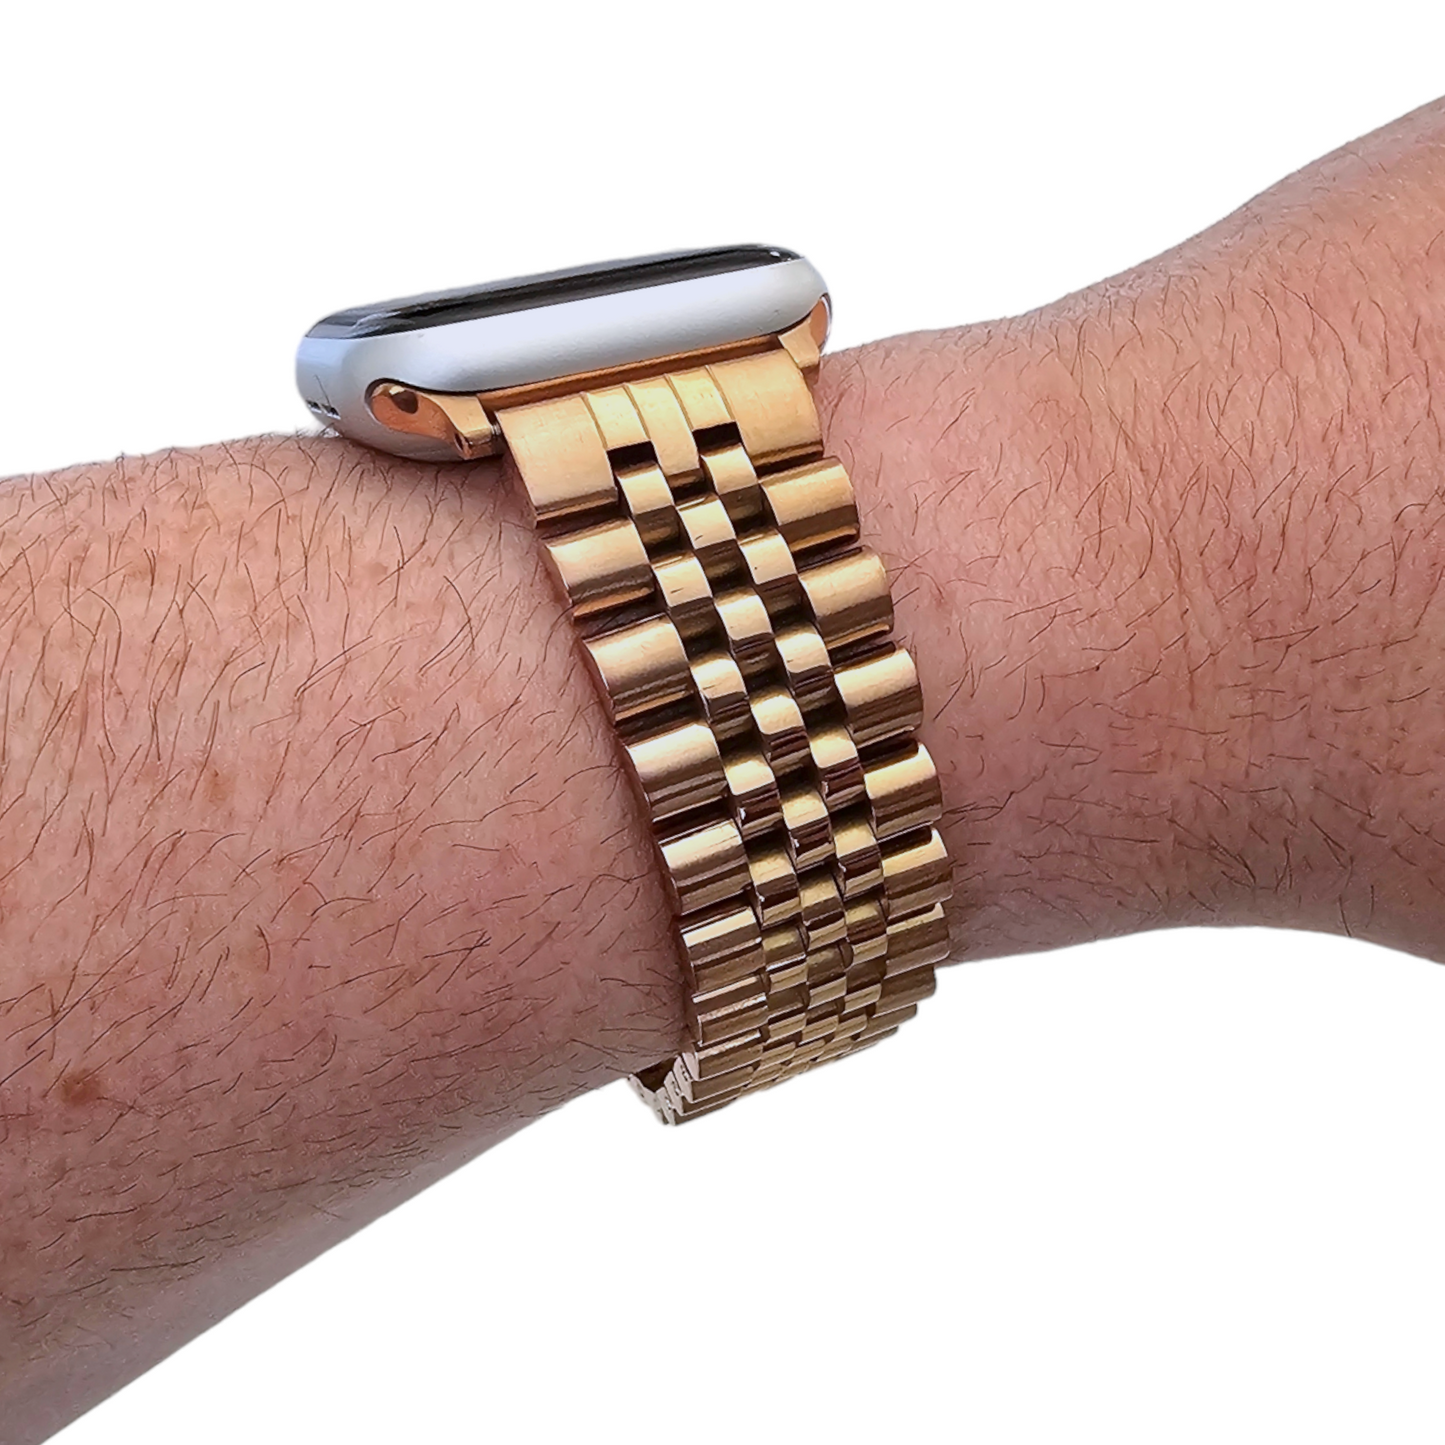 Rose Gold Classic Jubilee Style bracelet for Apple Watch Strap